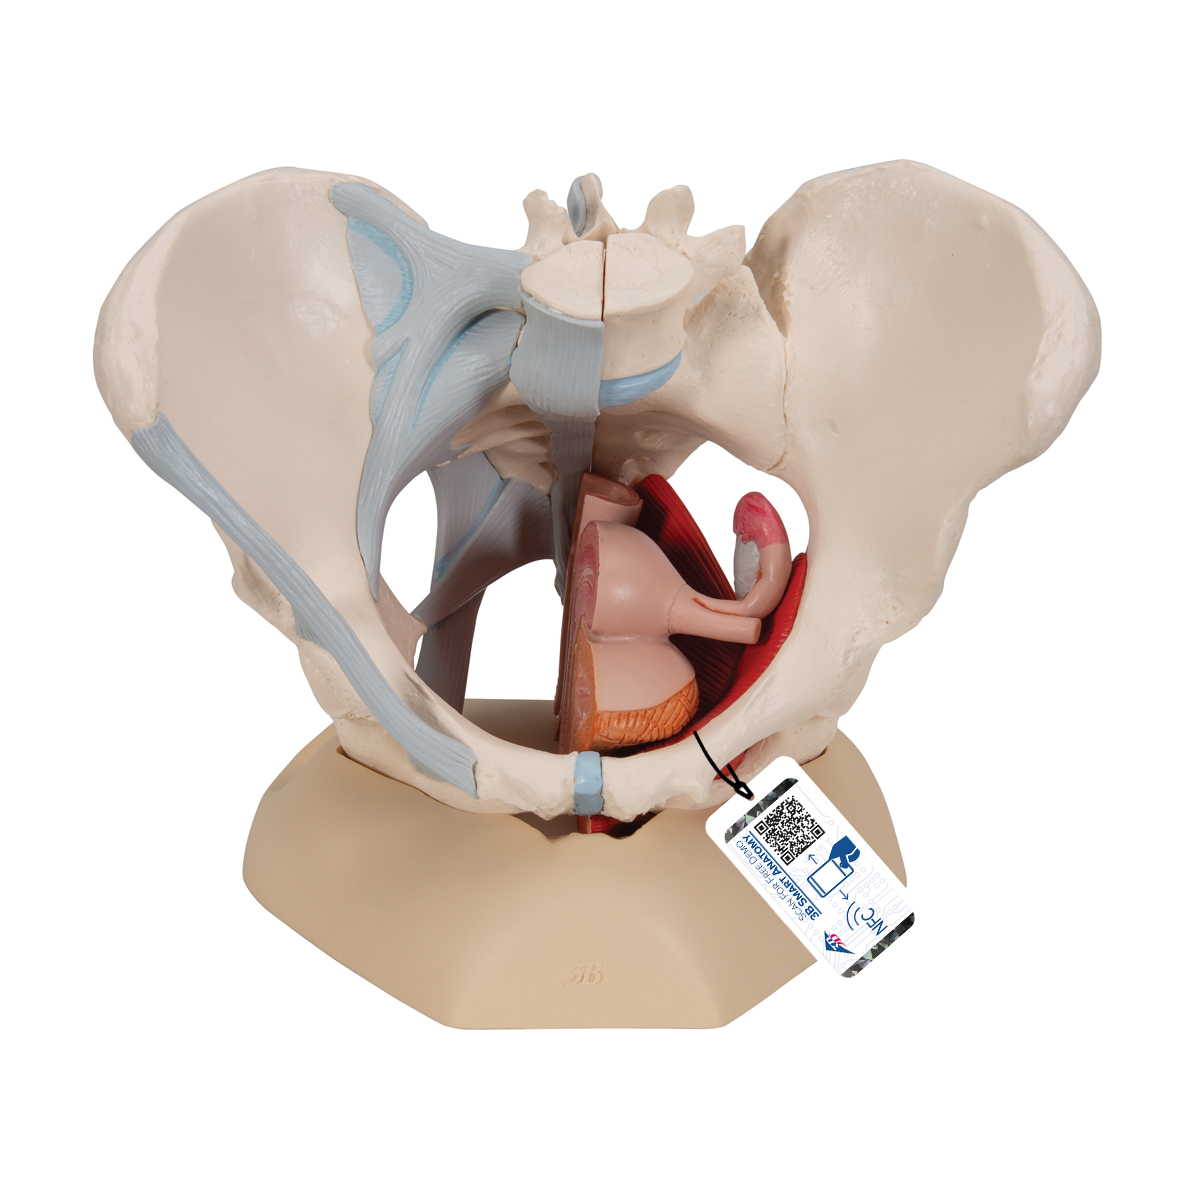 Medical Anatomical Female Pelvis Model with Removable Organs, 6